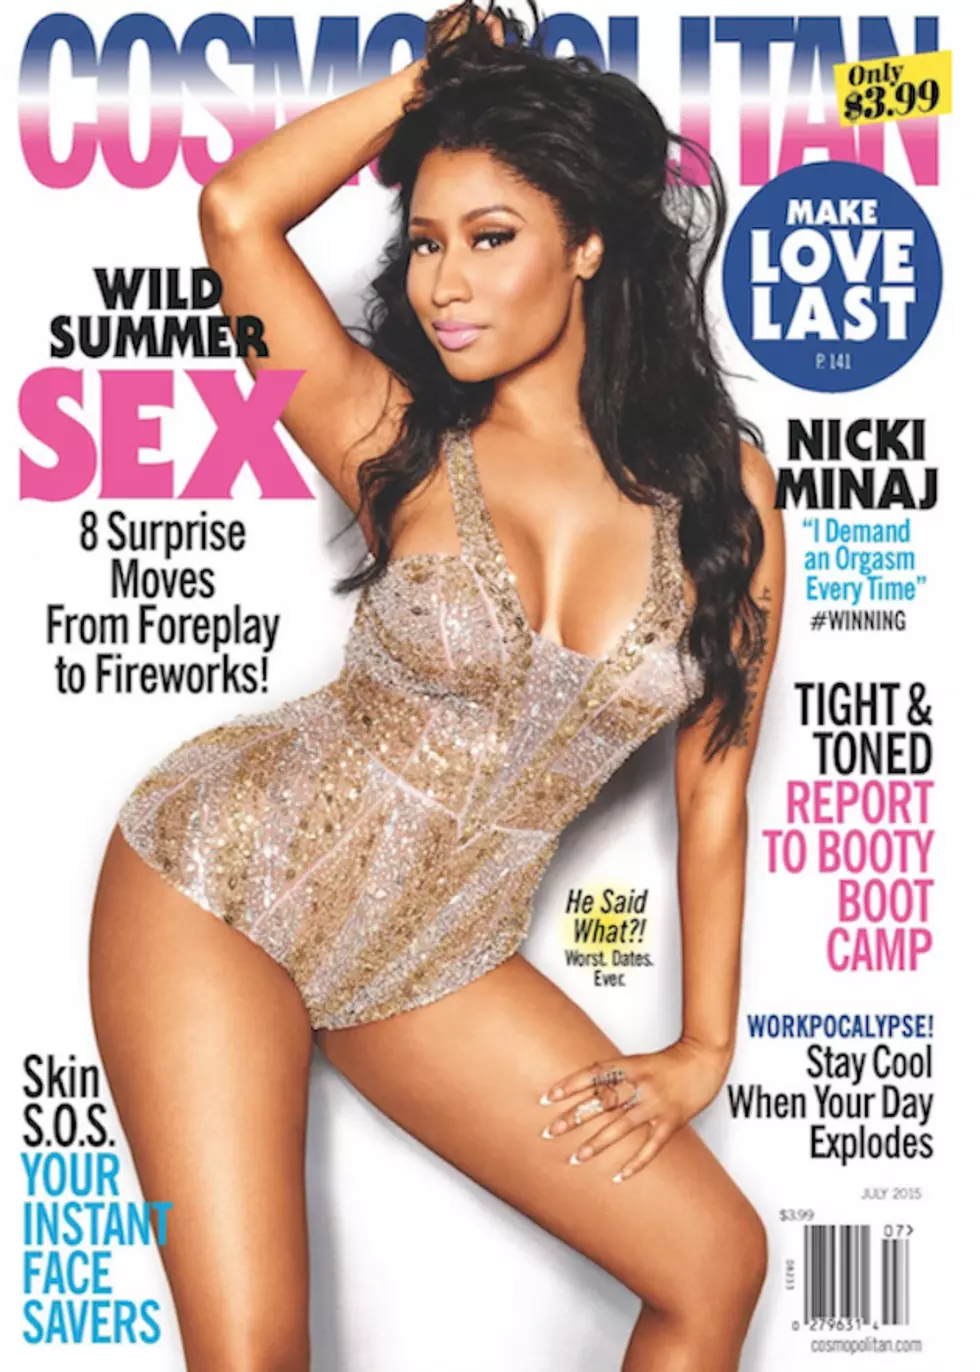 Nicki Minaj Talks Sex Life With Cosmopolitan: &#8216;I Demand an Orgasm Every Time&#8217;